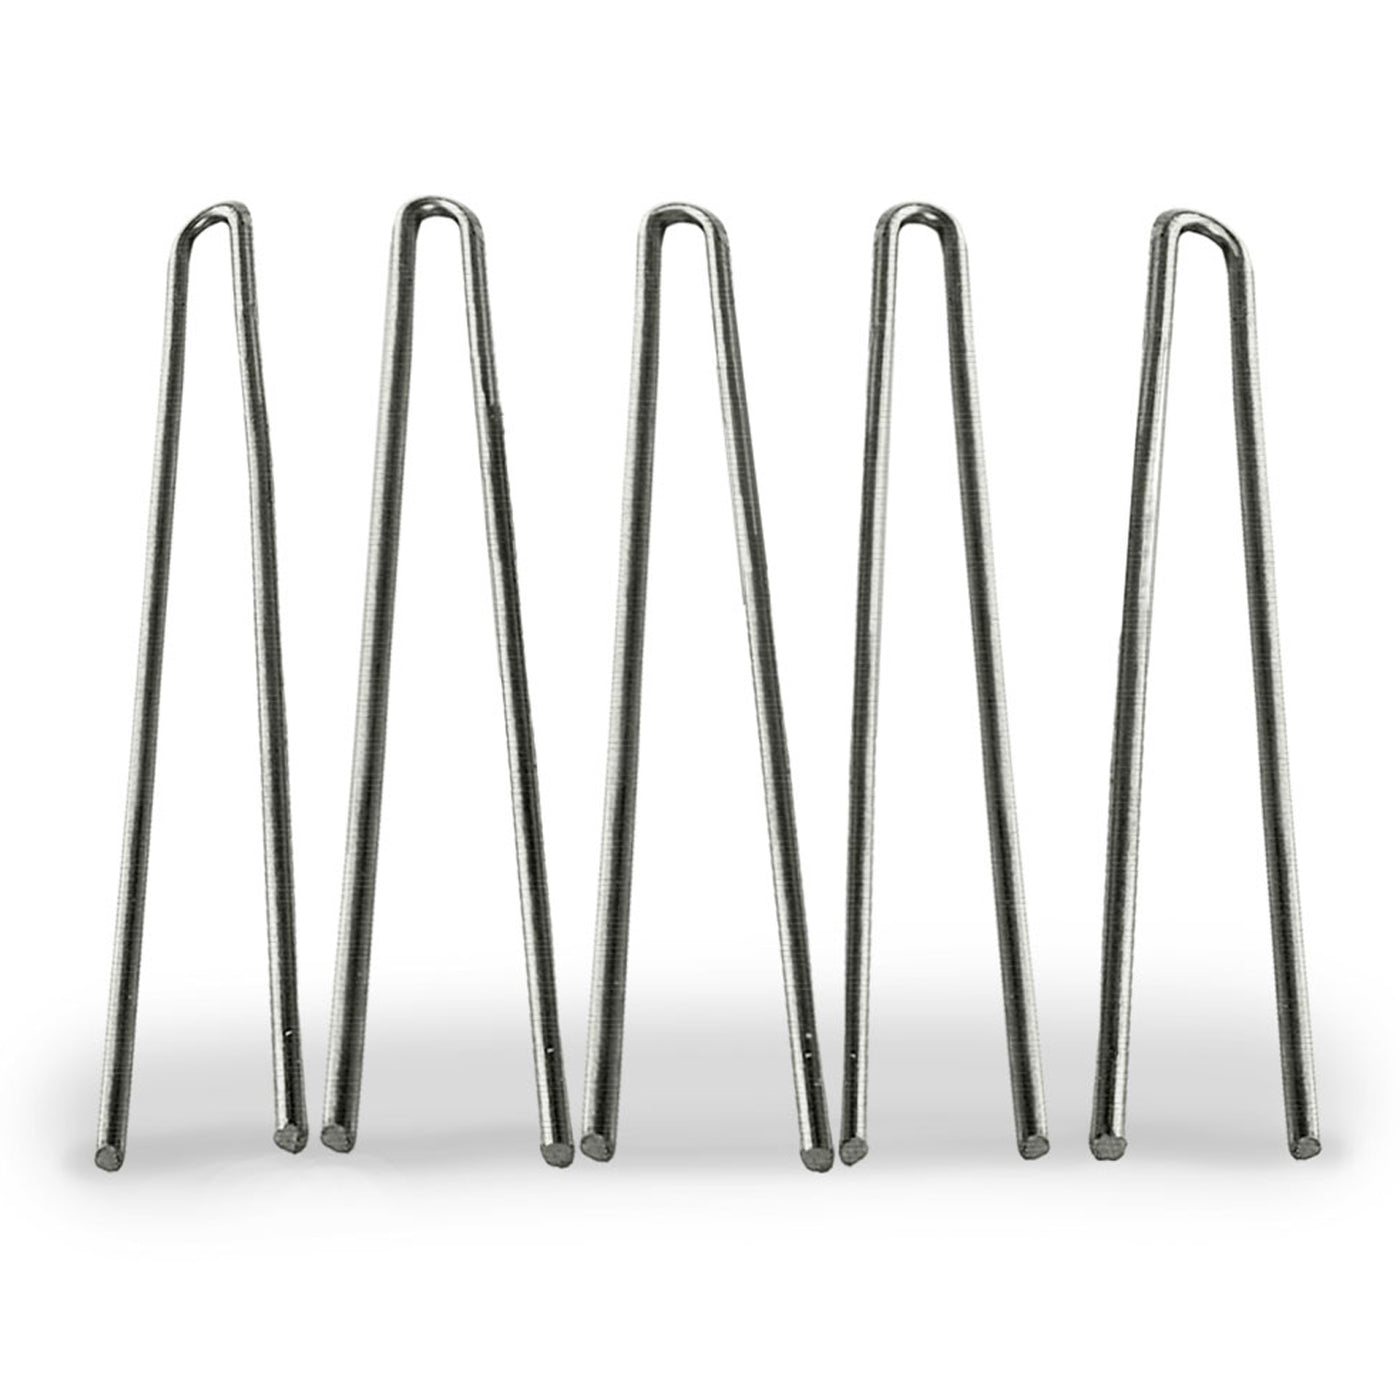 5 each RawEdge Steel Hairpin Edging Stakes (Raw Steel)